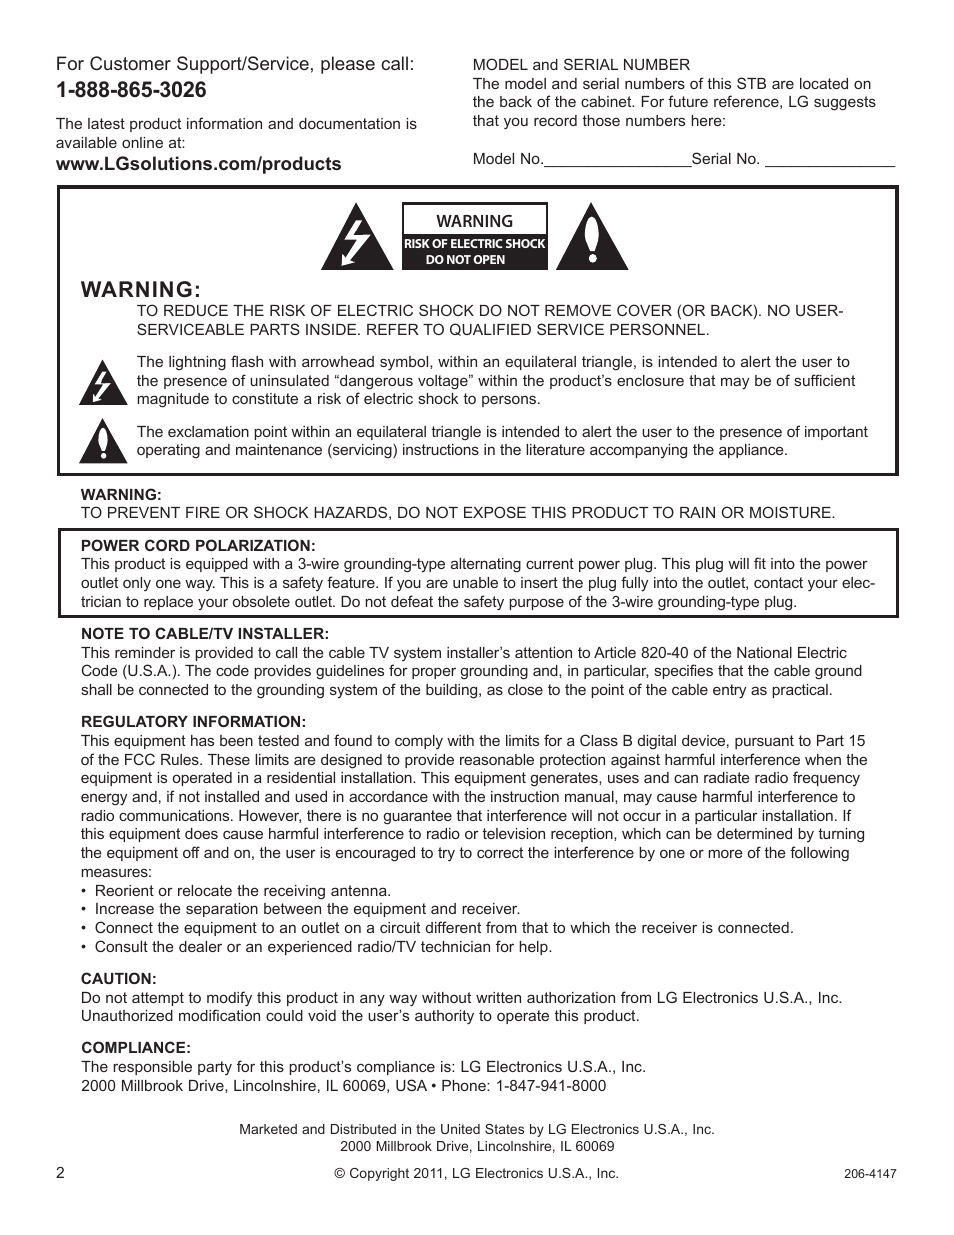 Warning | LG STB1000 User Manual | Page 2 / 86